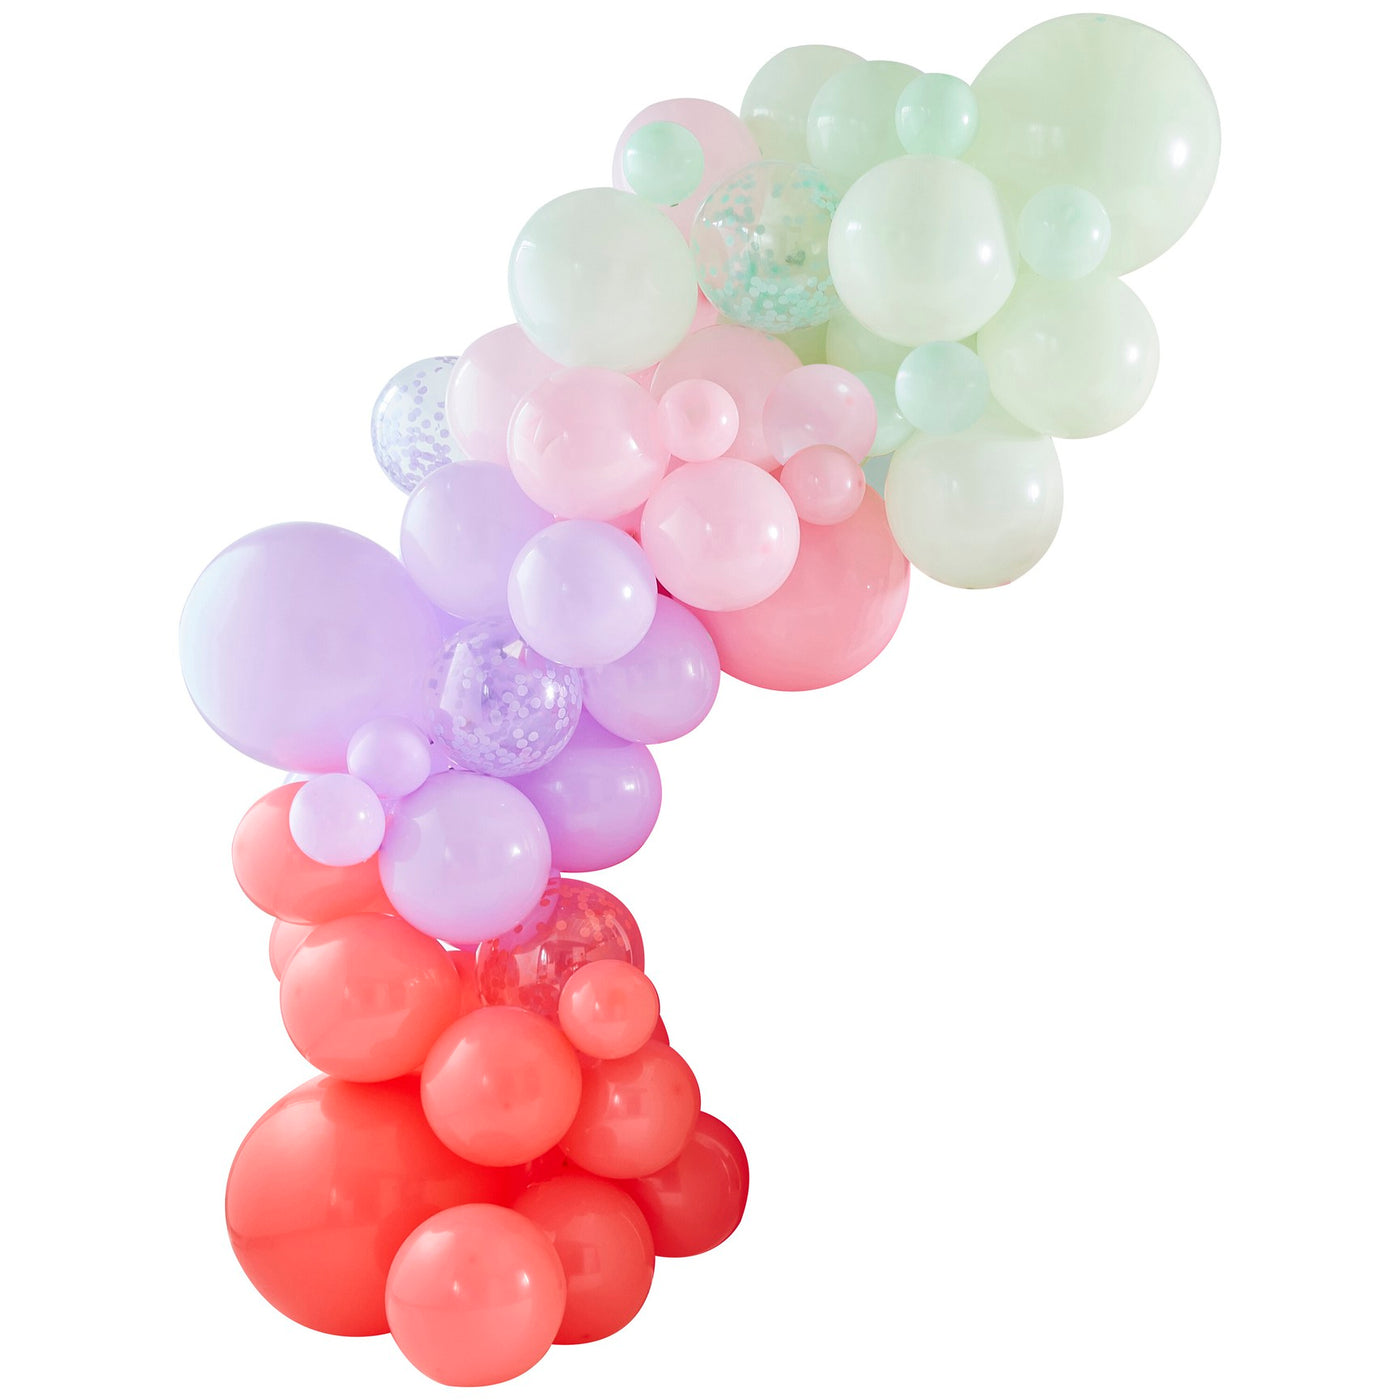 Ballongirlande, Party Like a Dinosaur, DIY Party Deko, 75 Ballone inkl. 5m Ballonband